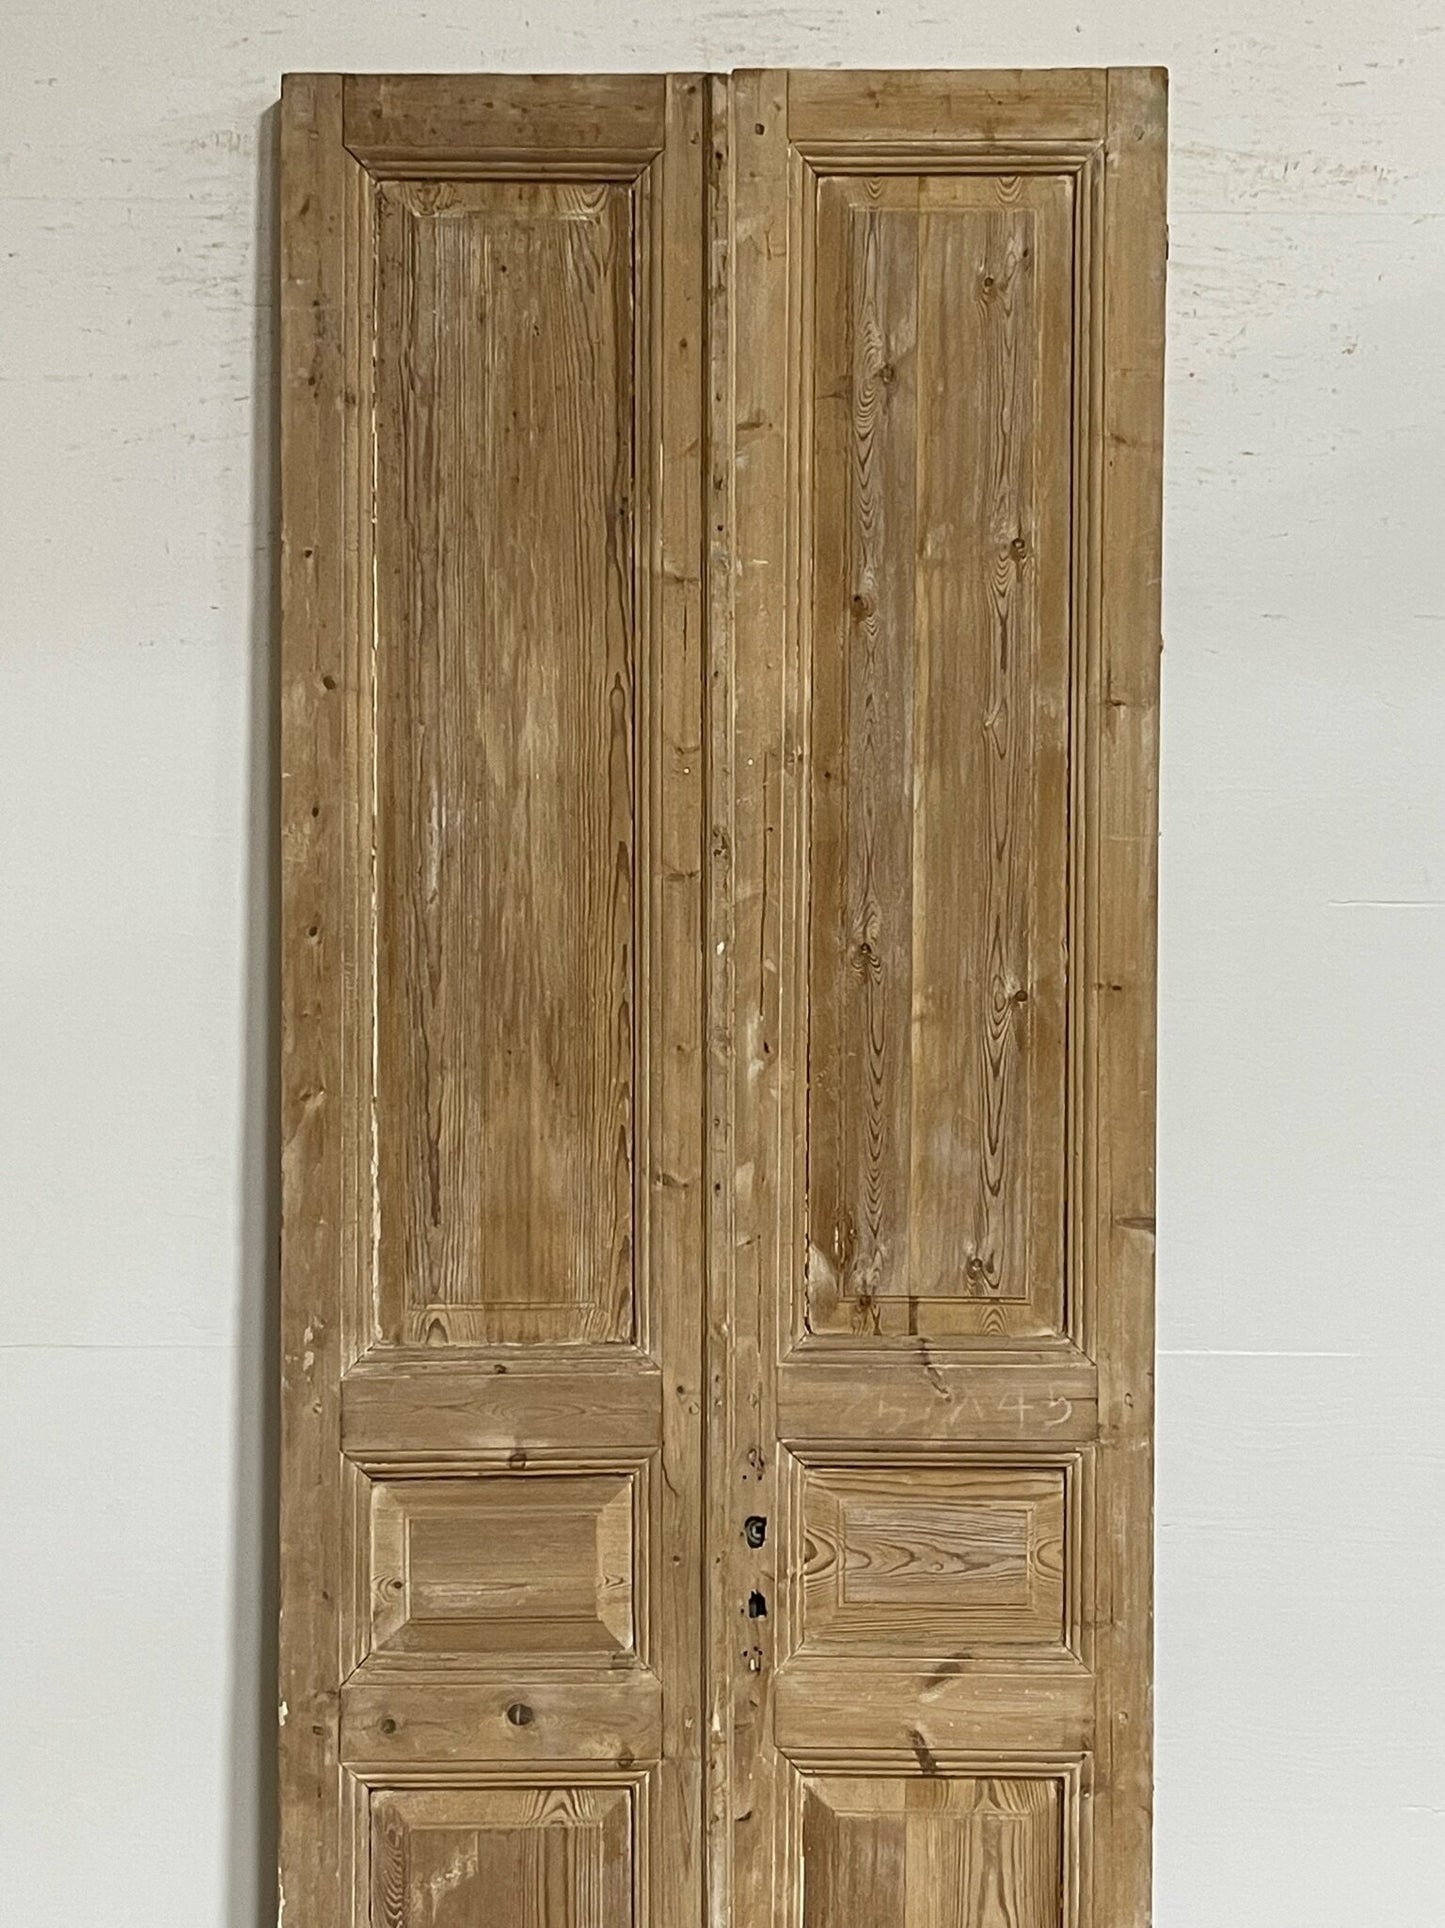 Antique French doors (101.25X35.75) G0166